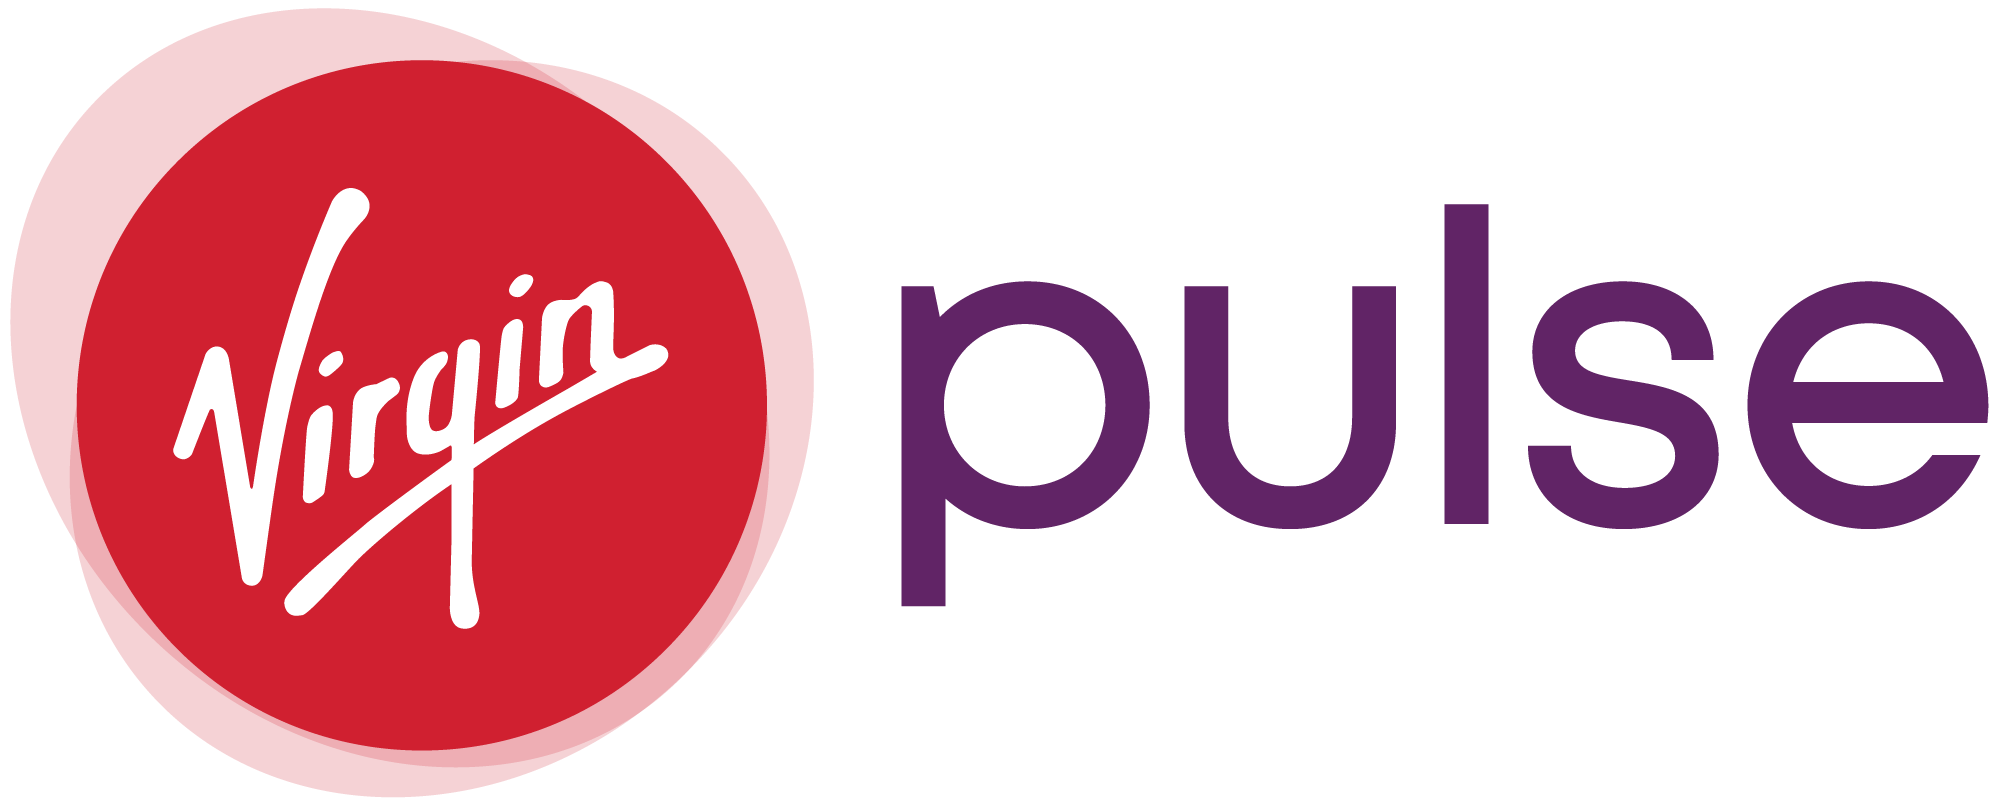 Virgin Pulse horizontal logo